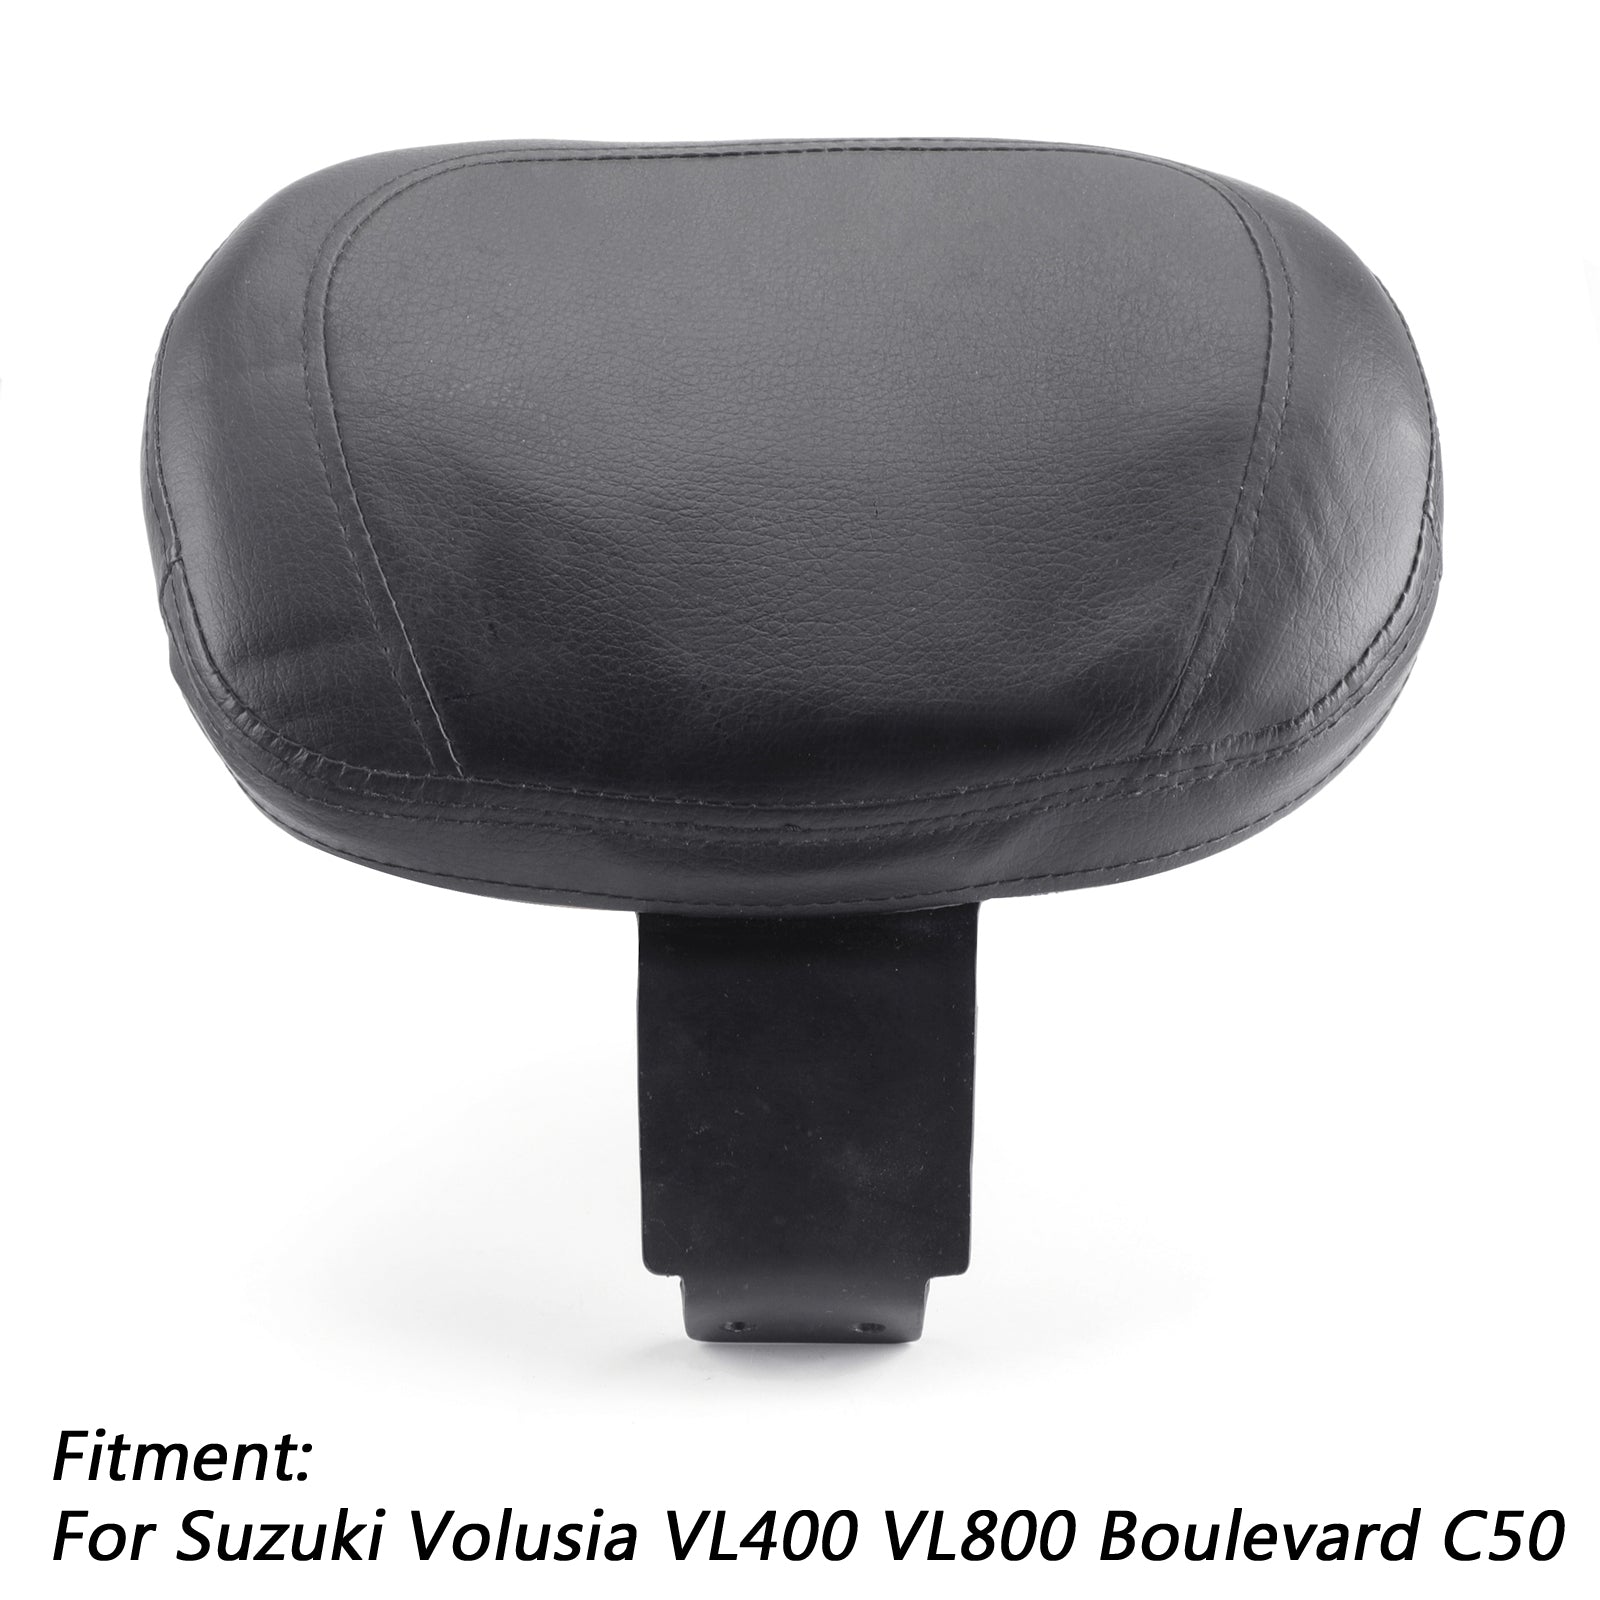 Driver Rear Backrest Cushion Pad For Suzuki Volusia VL400 VL800 Boulevard C50